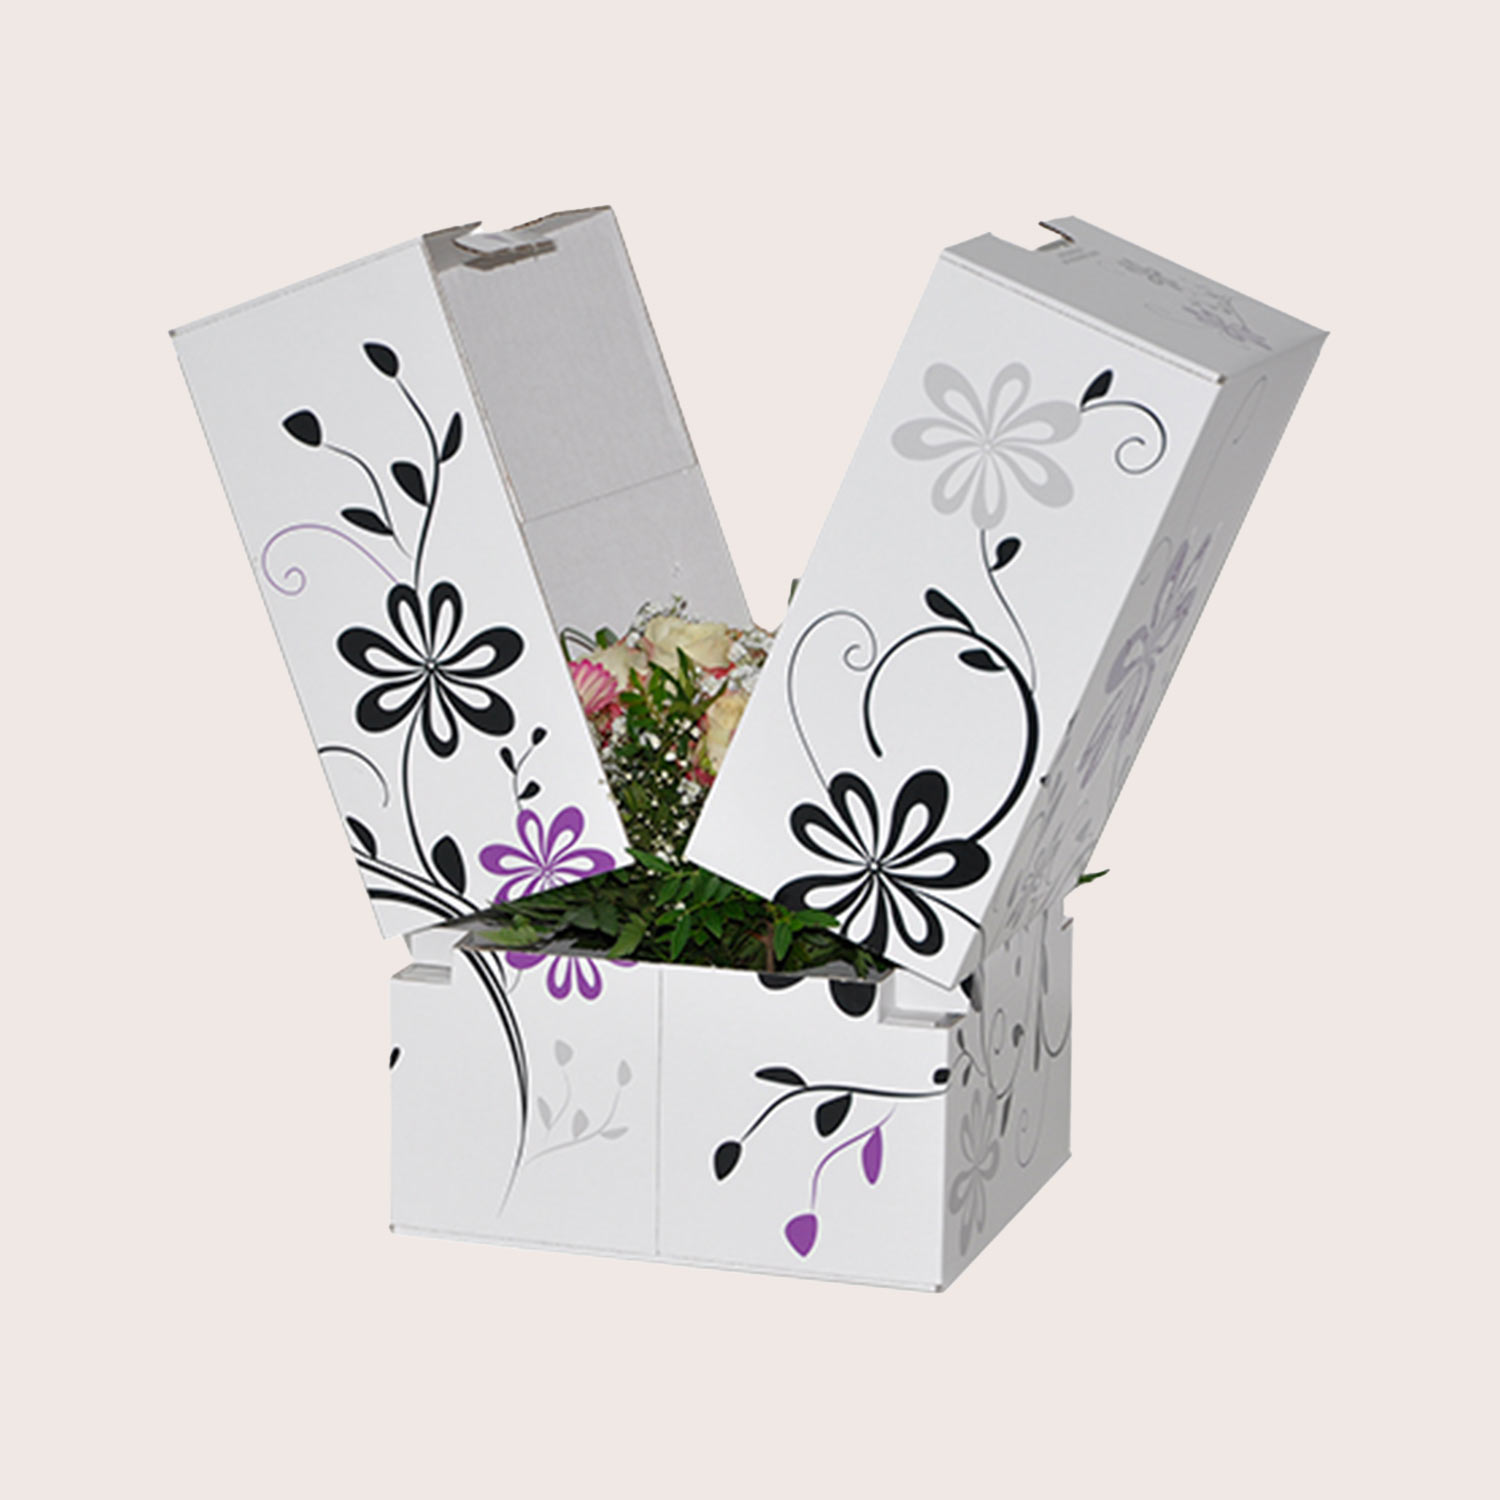 Flower packaging for shipping